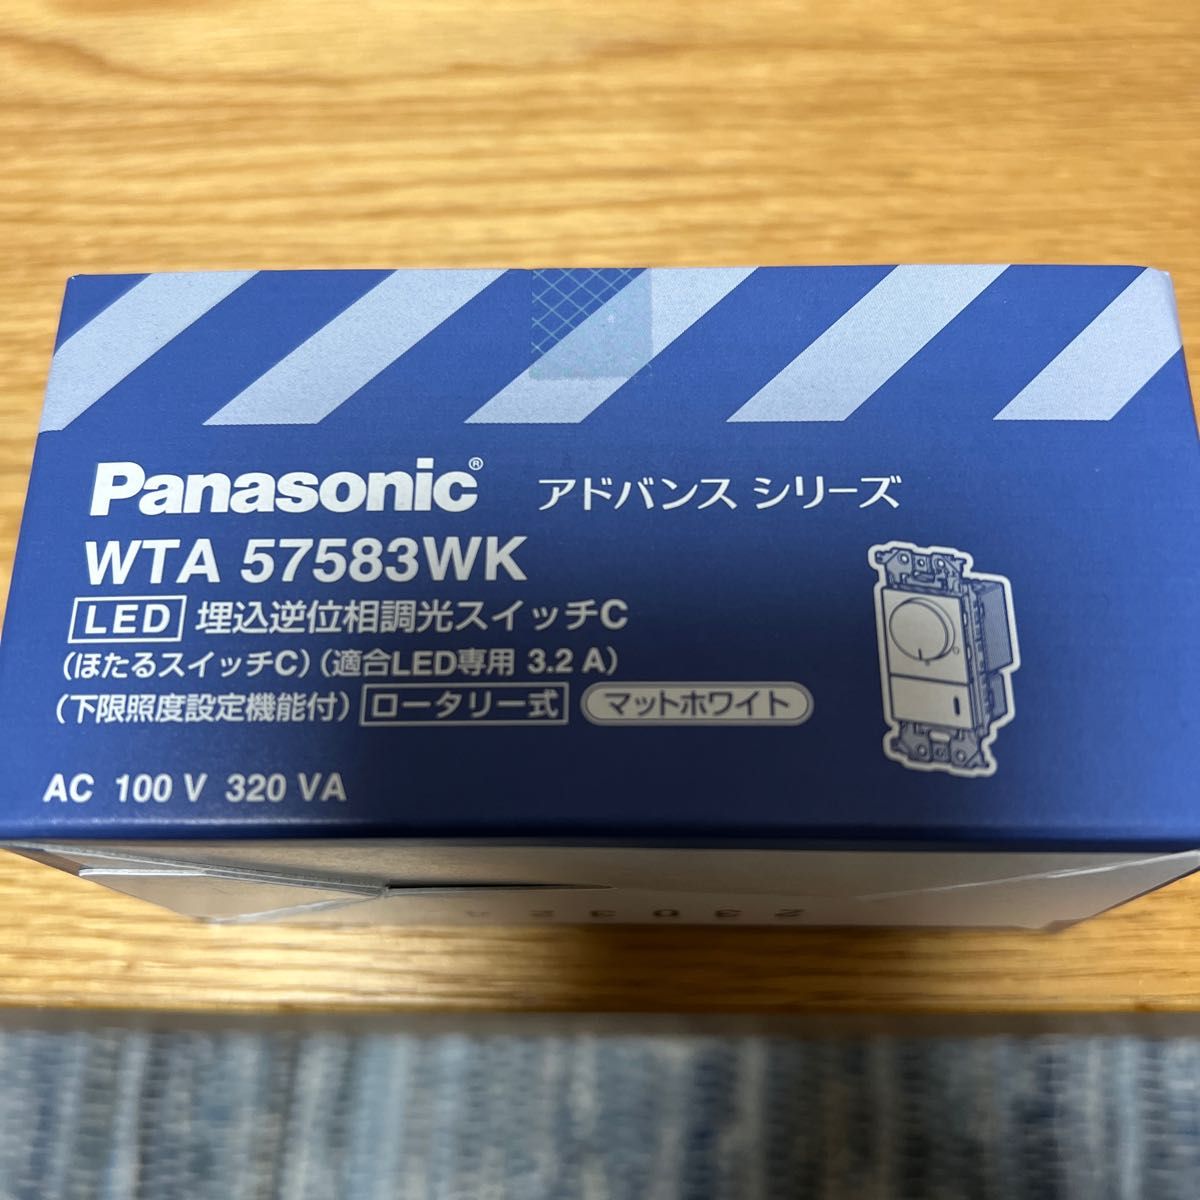 Panasonic アドバンスシリーズ WTA 57583WK 「LED 埋込逆位相調光